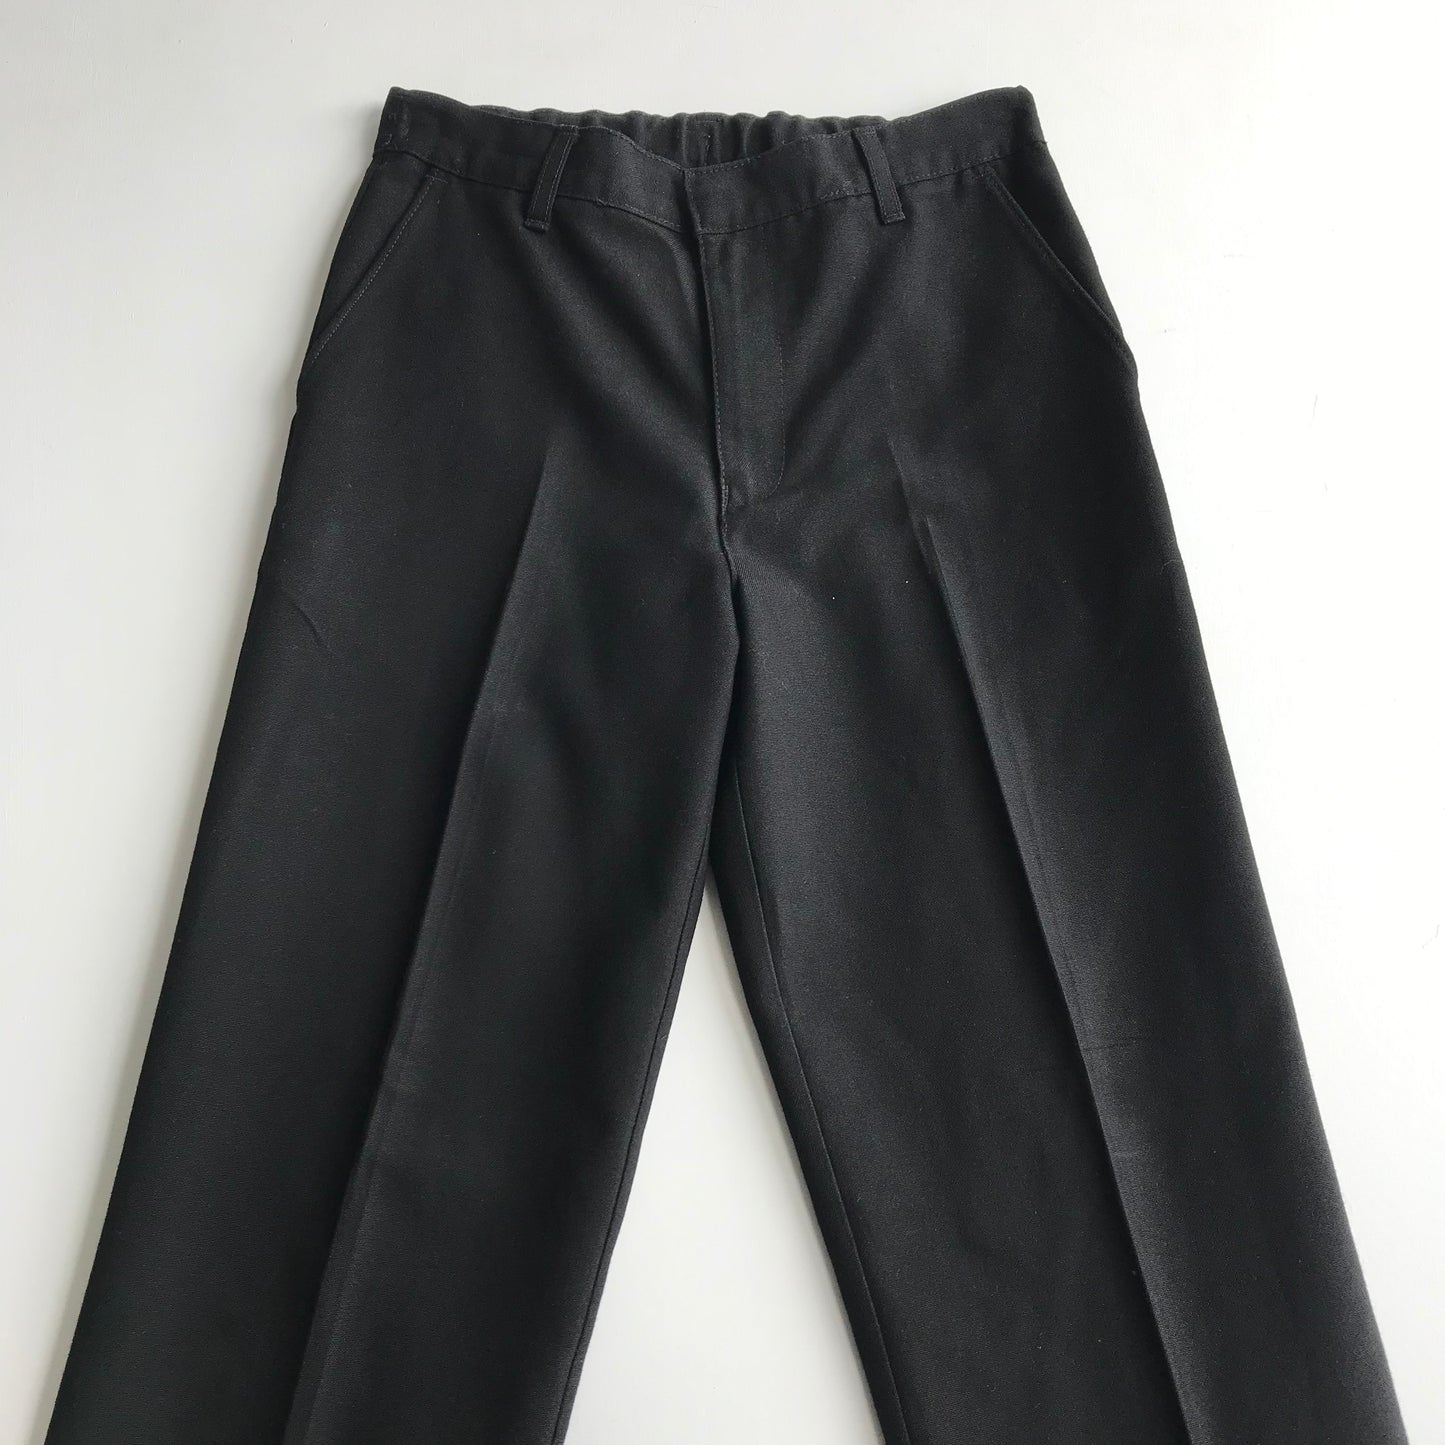 M&S Black Regular School Trousers with Adjustable Waist